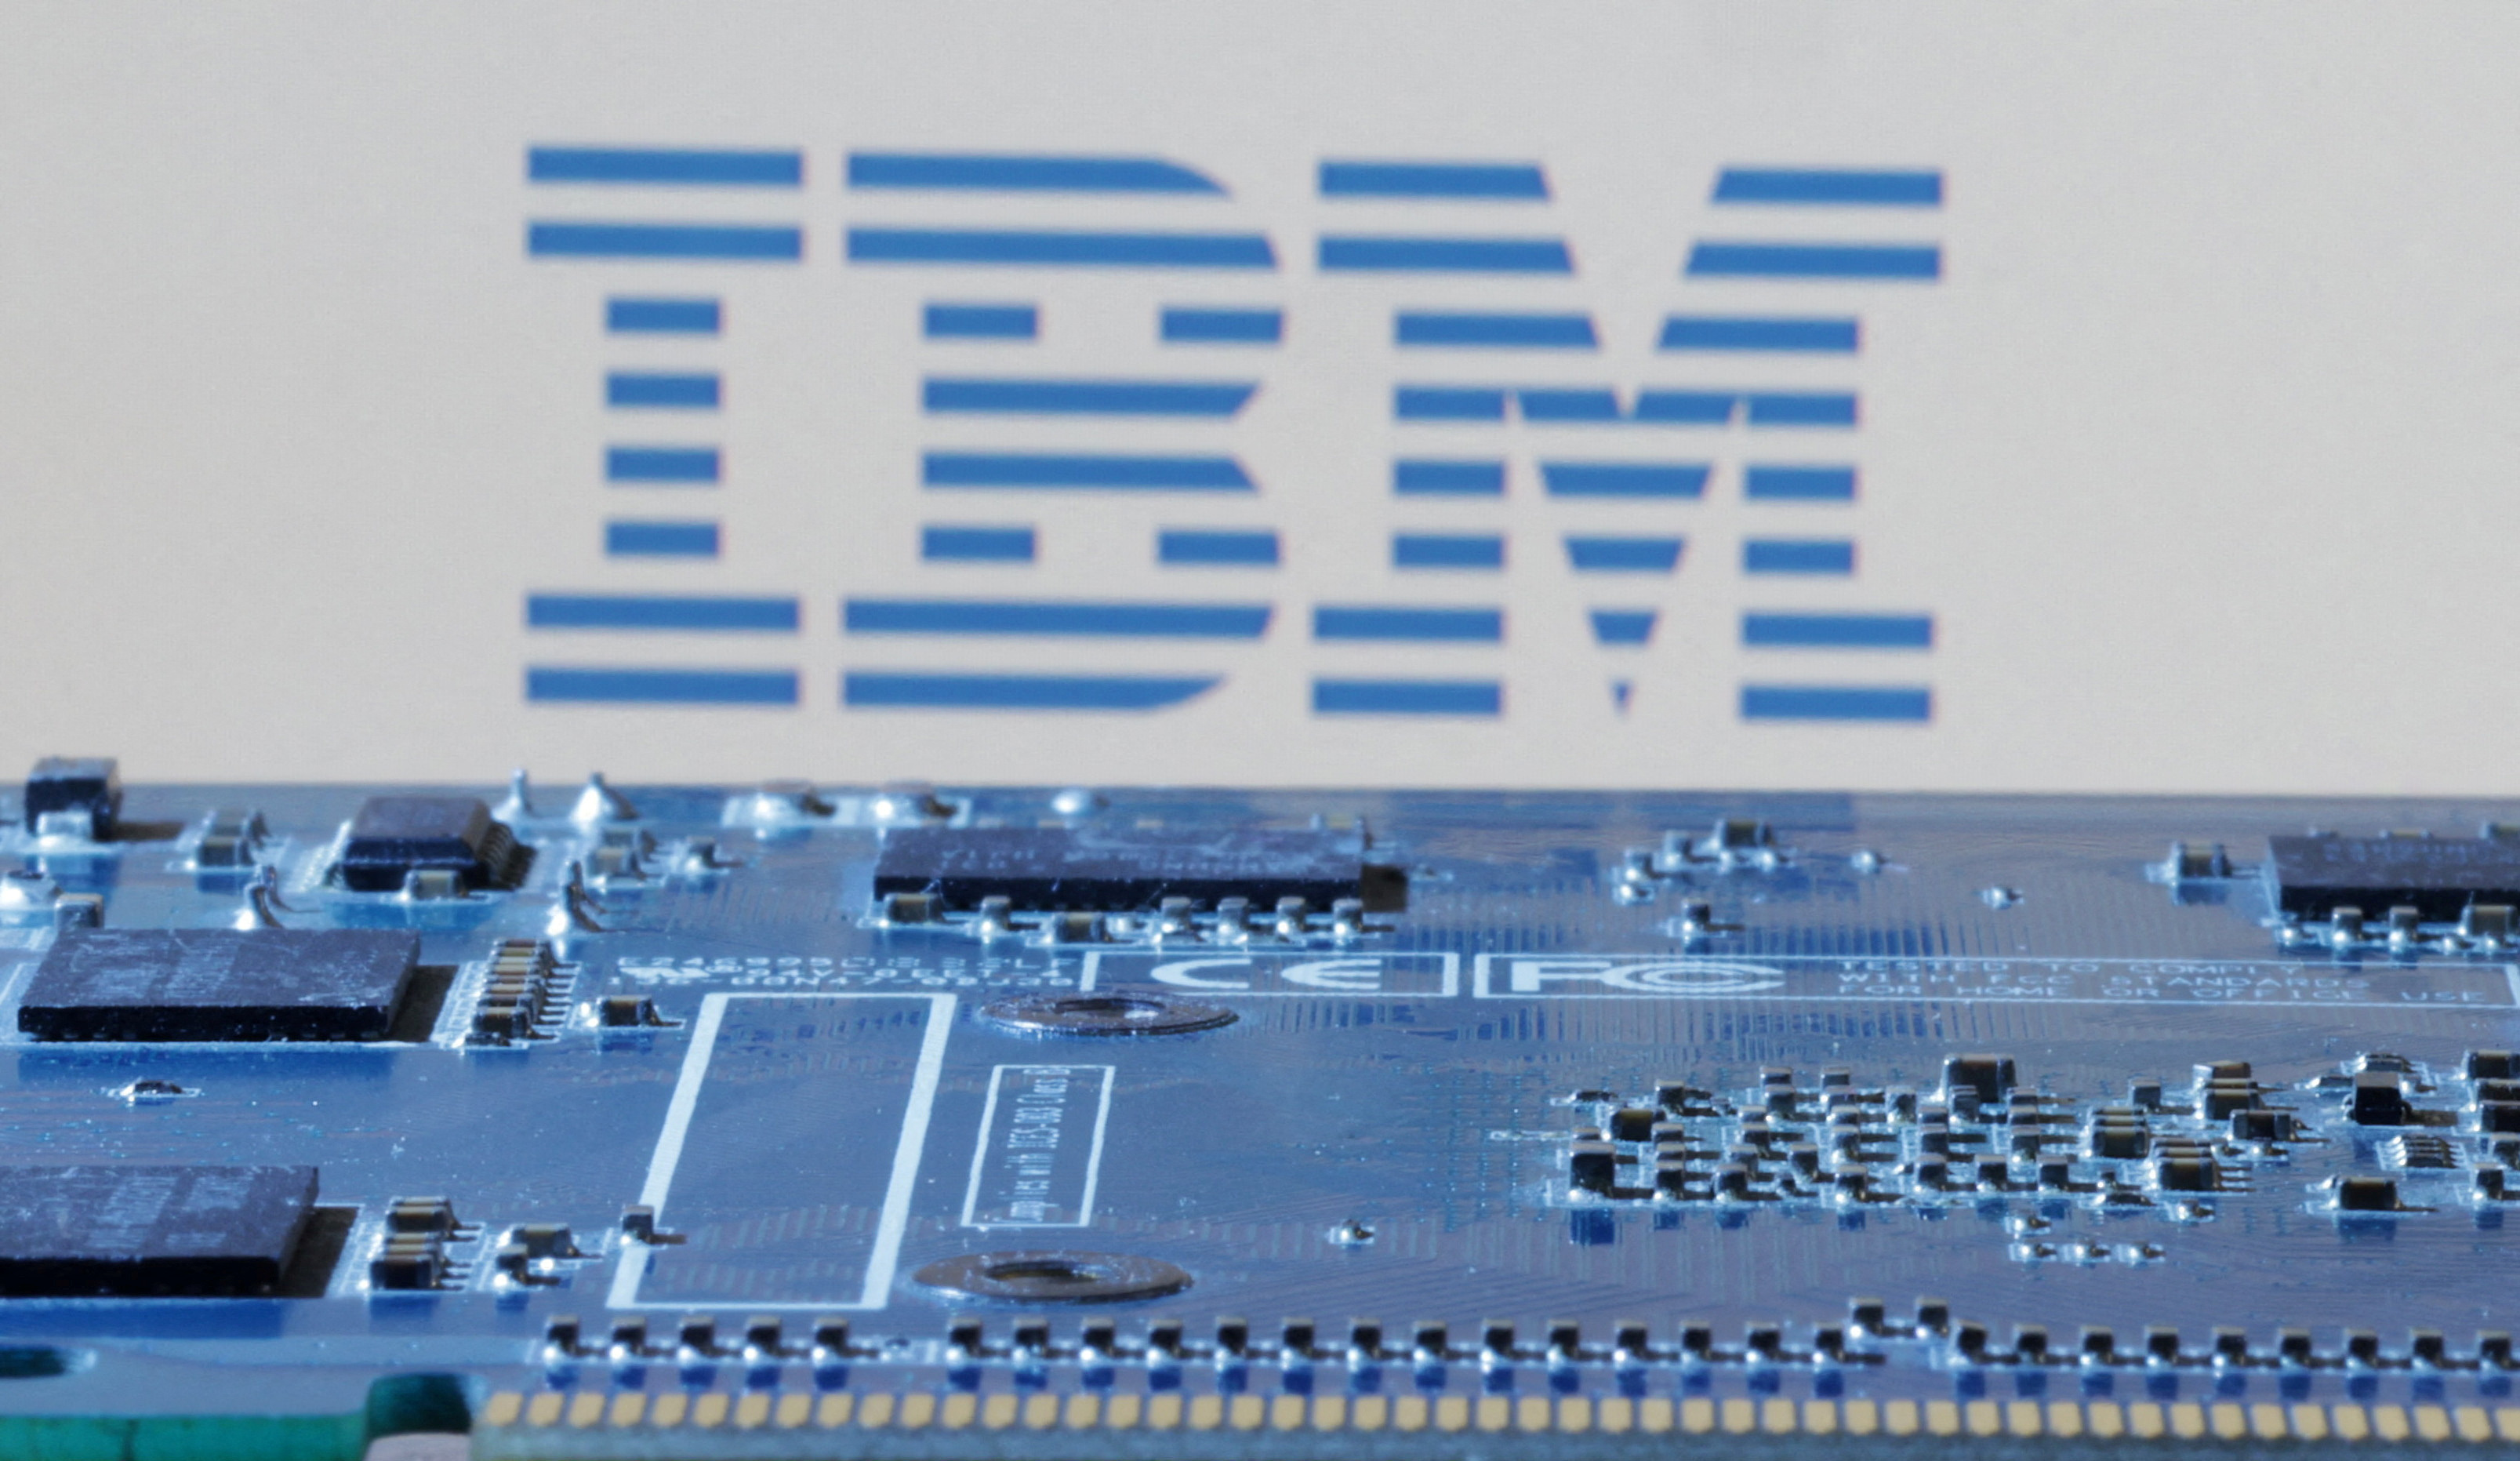 Illustration shows IBM logo